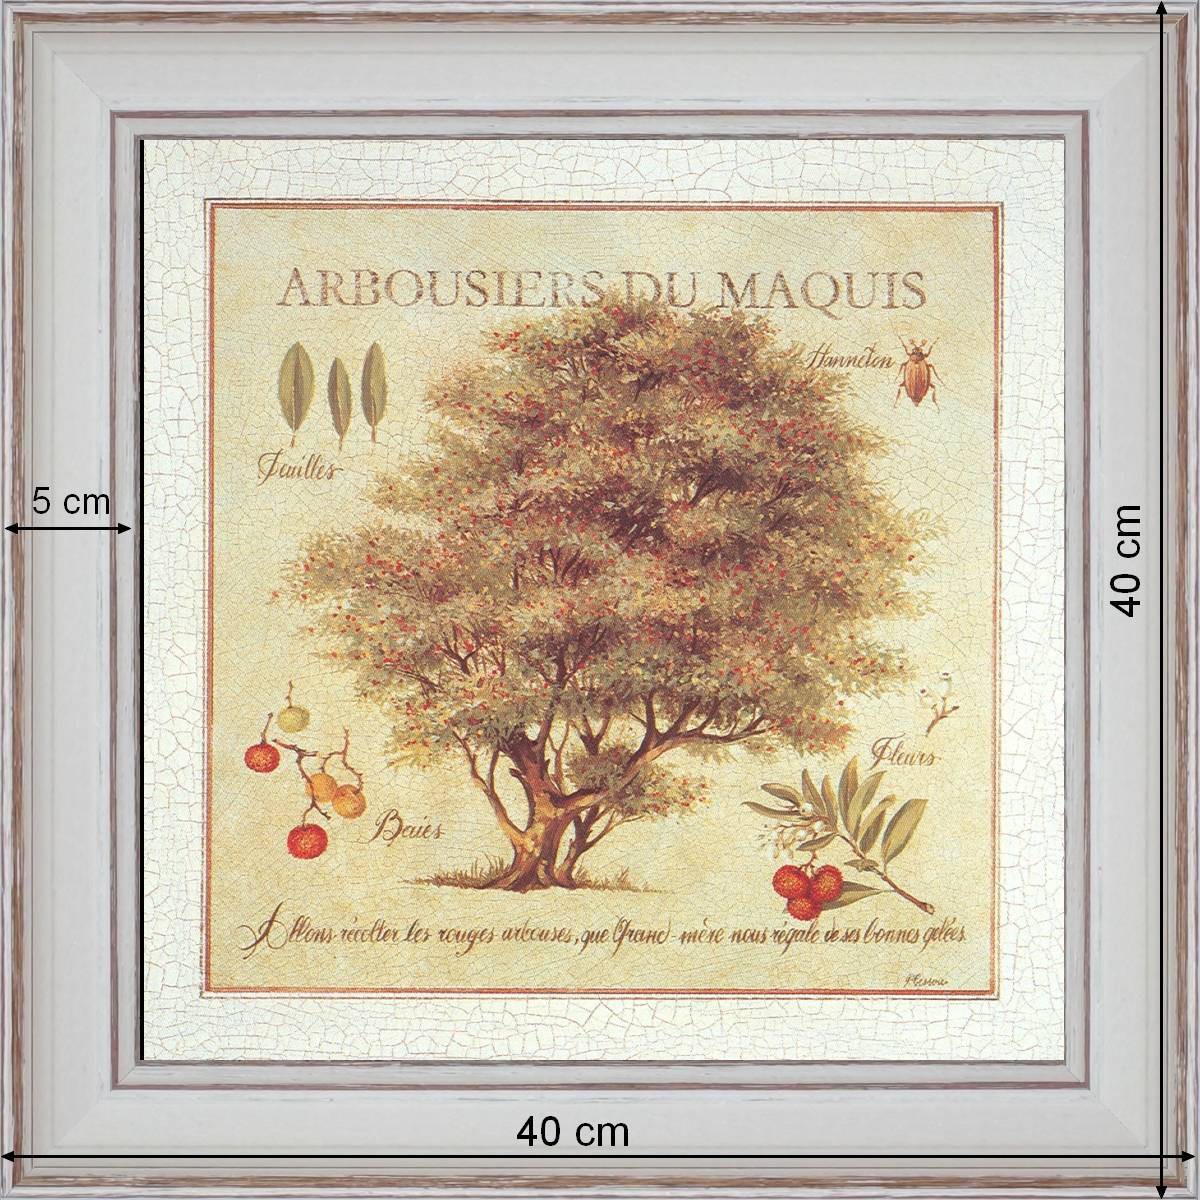 Cane-apple bushes of the Maquis - dimension 40 x 40 cm -  